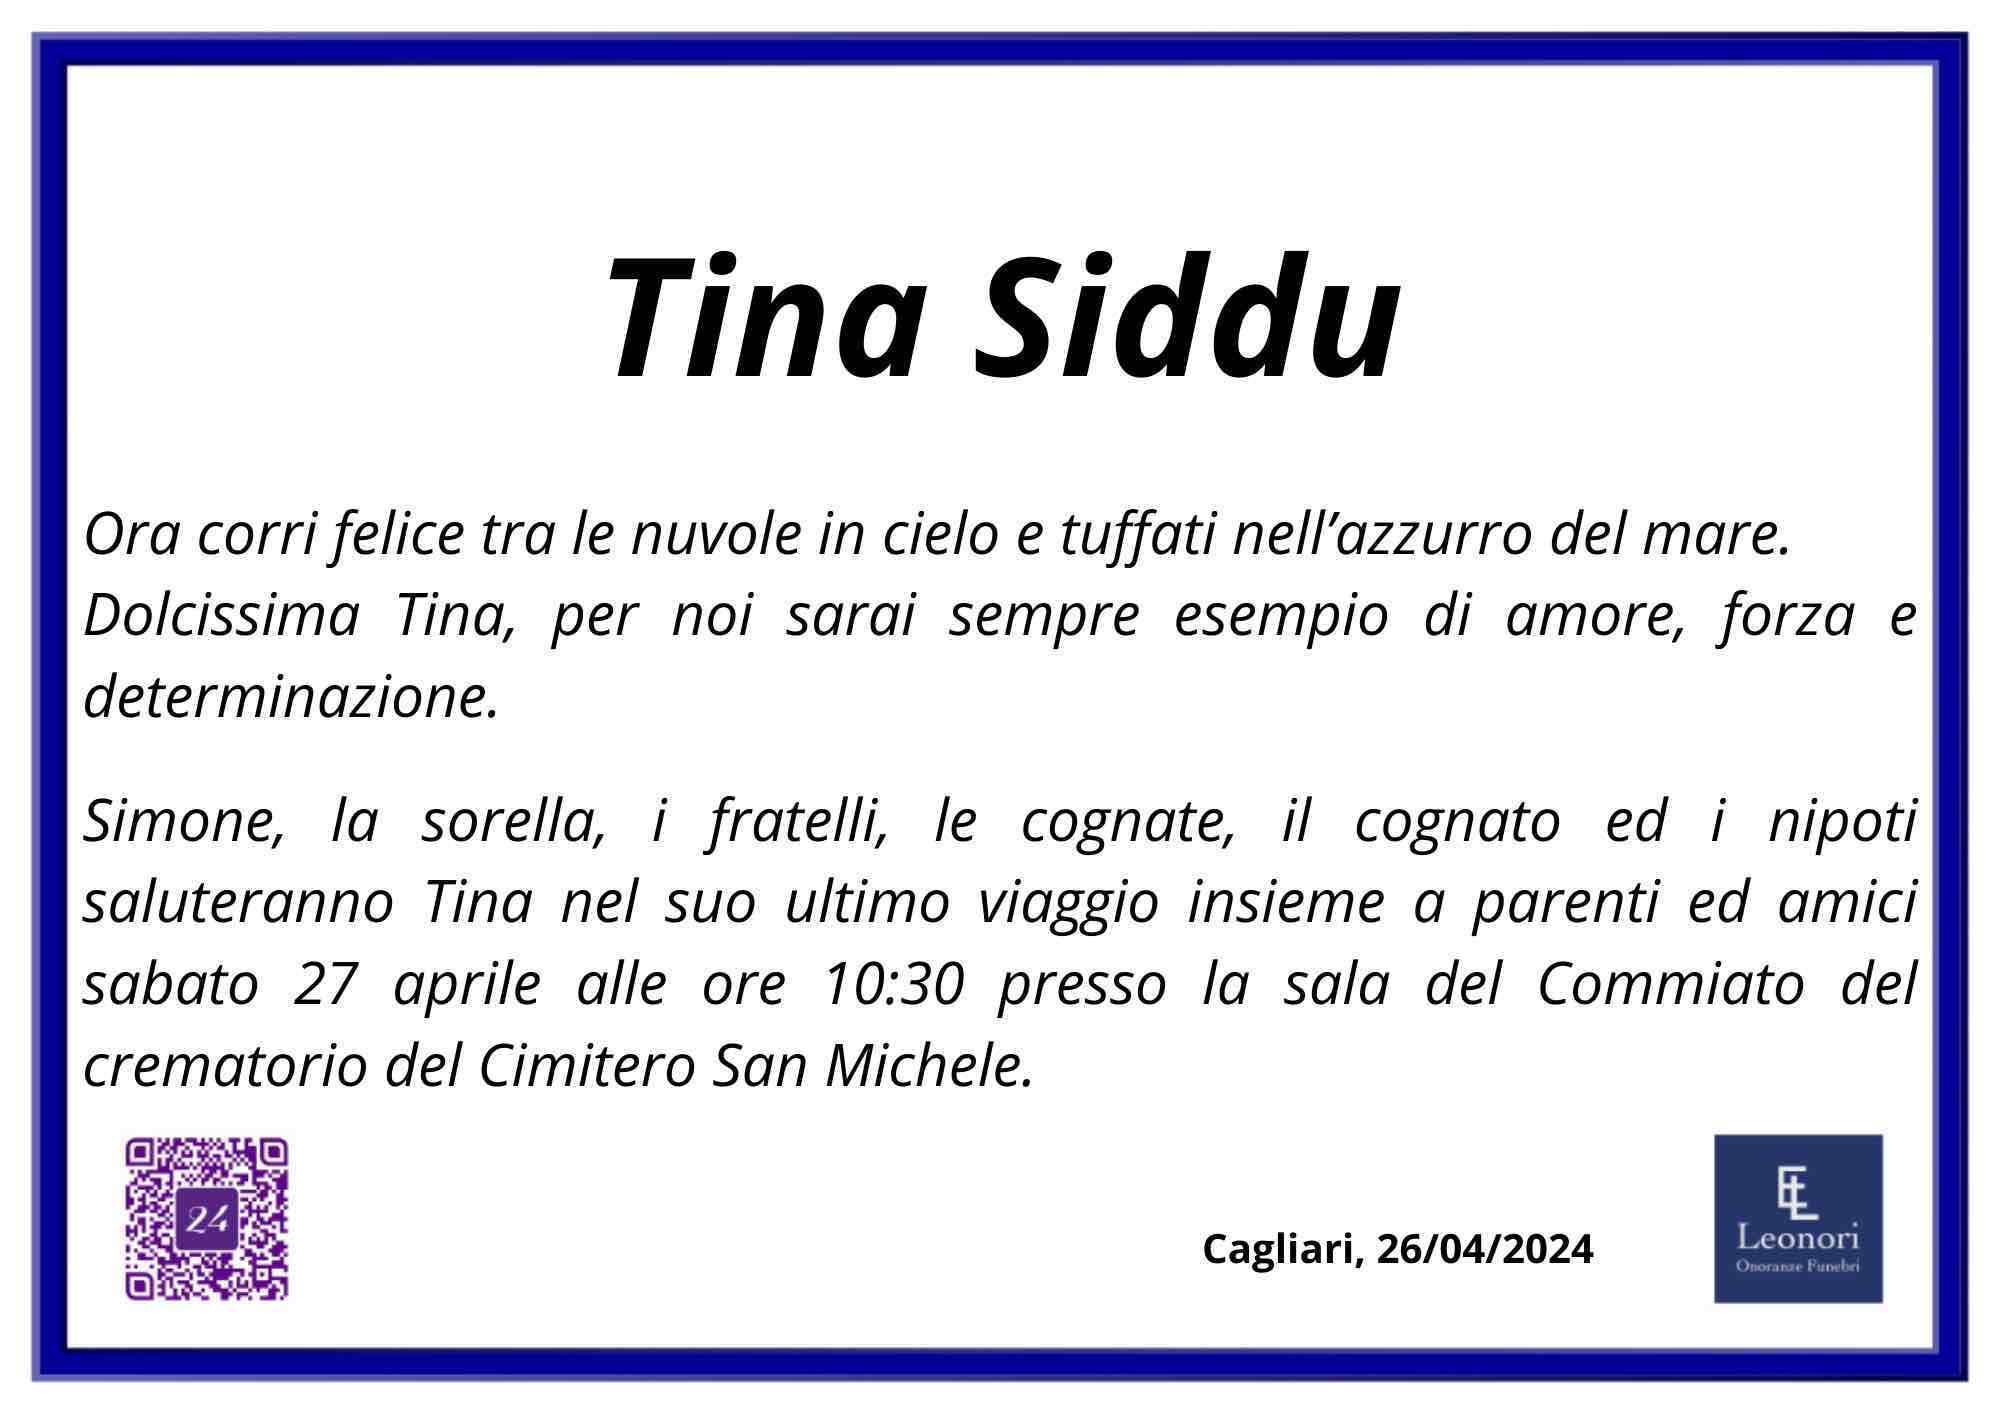 Tina Siddu